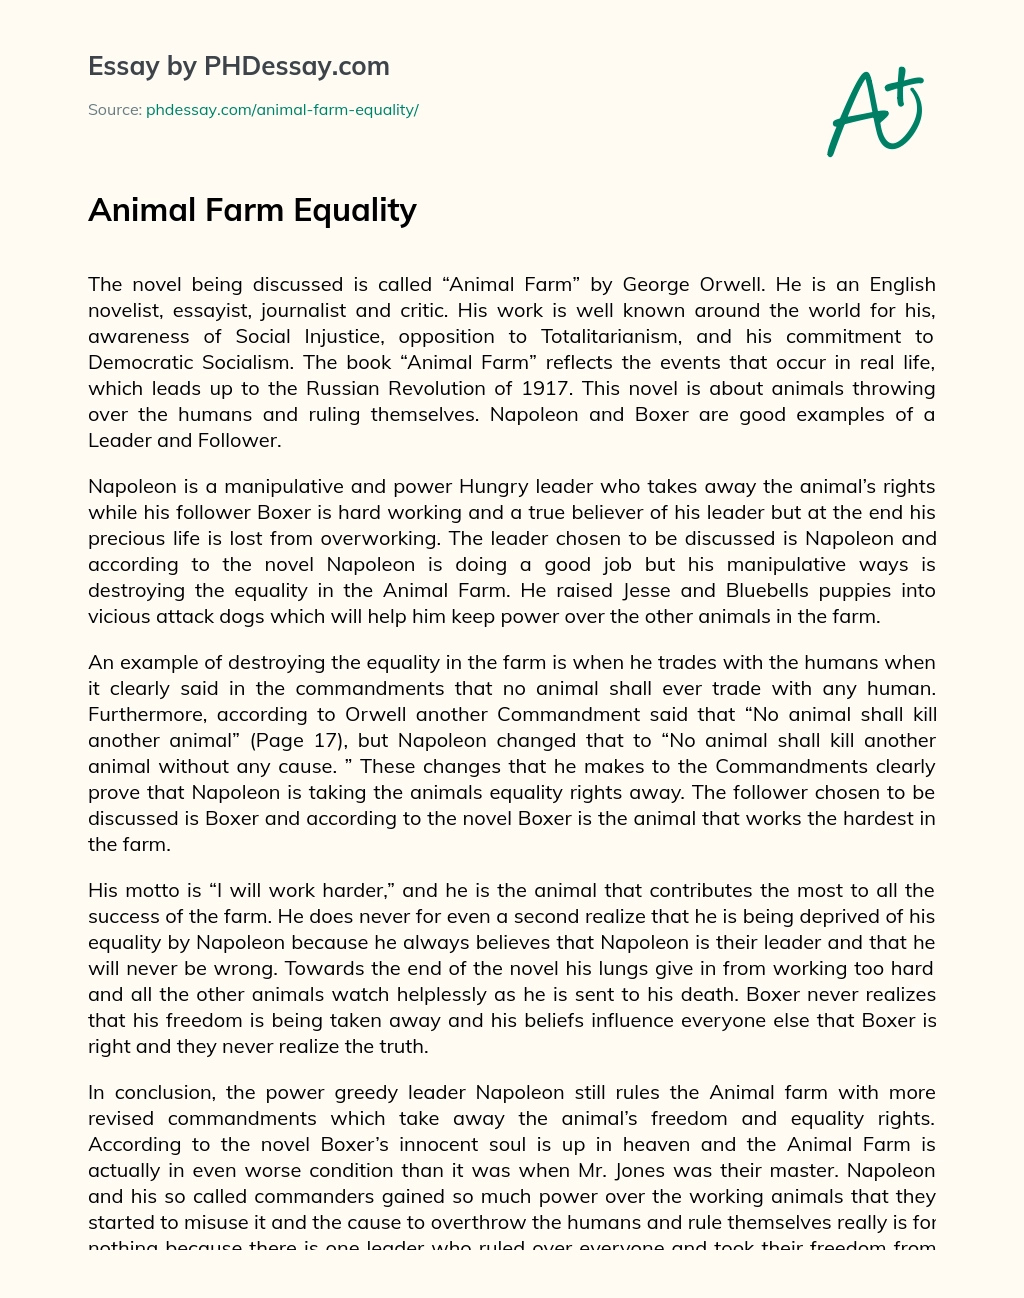 Animal Farm Equality essay